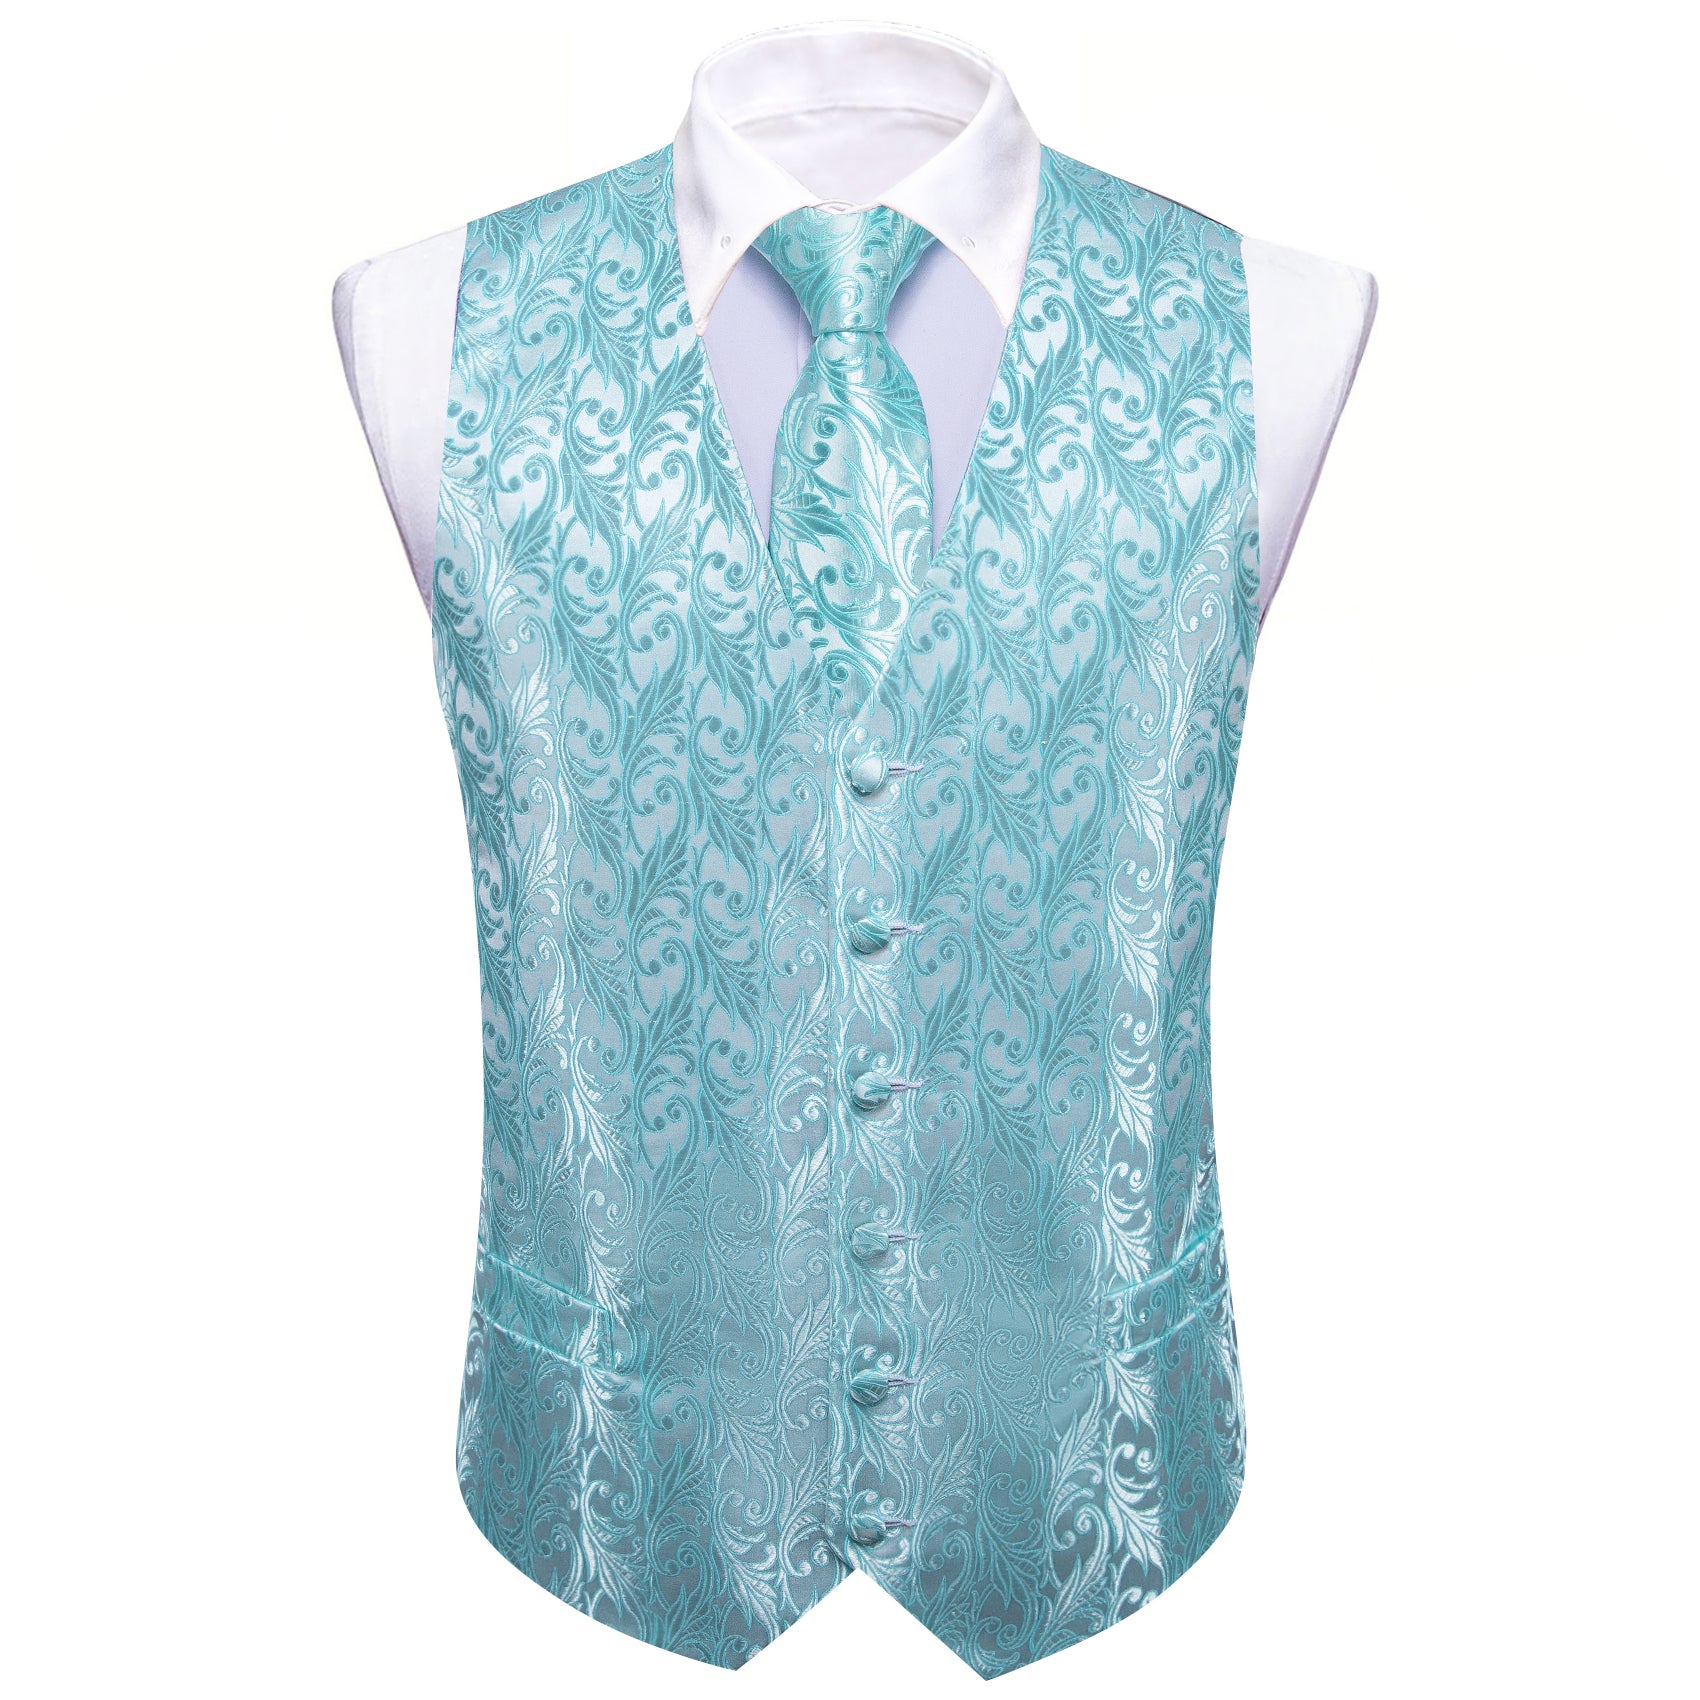 Barry.wang Men's Vest Aqua Floral Silk Vest Tie Hanky Cufflinks Set New Fashion